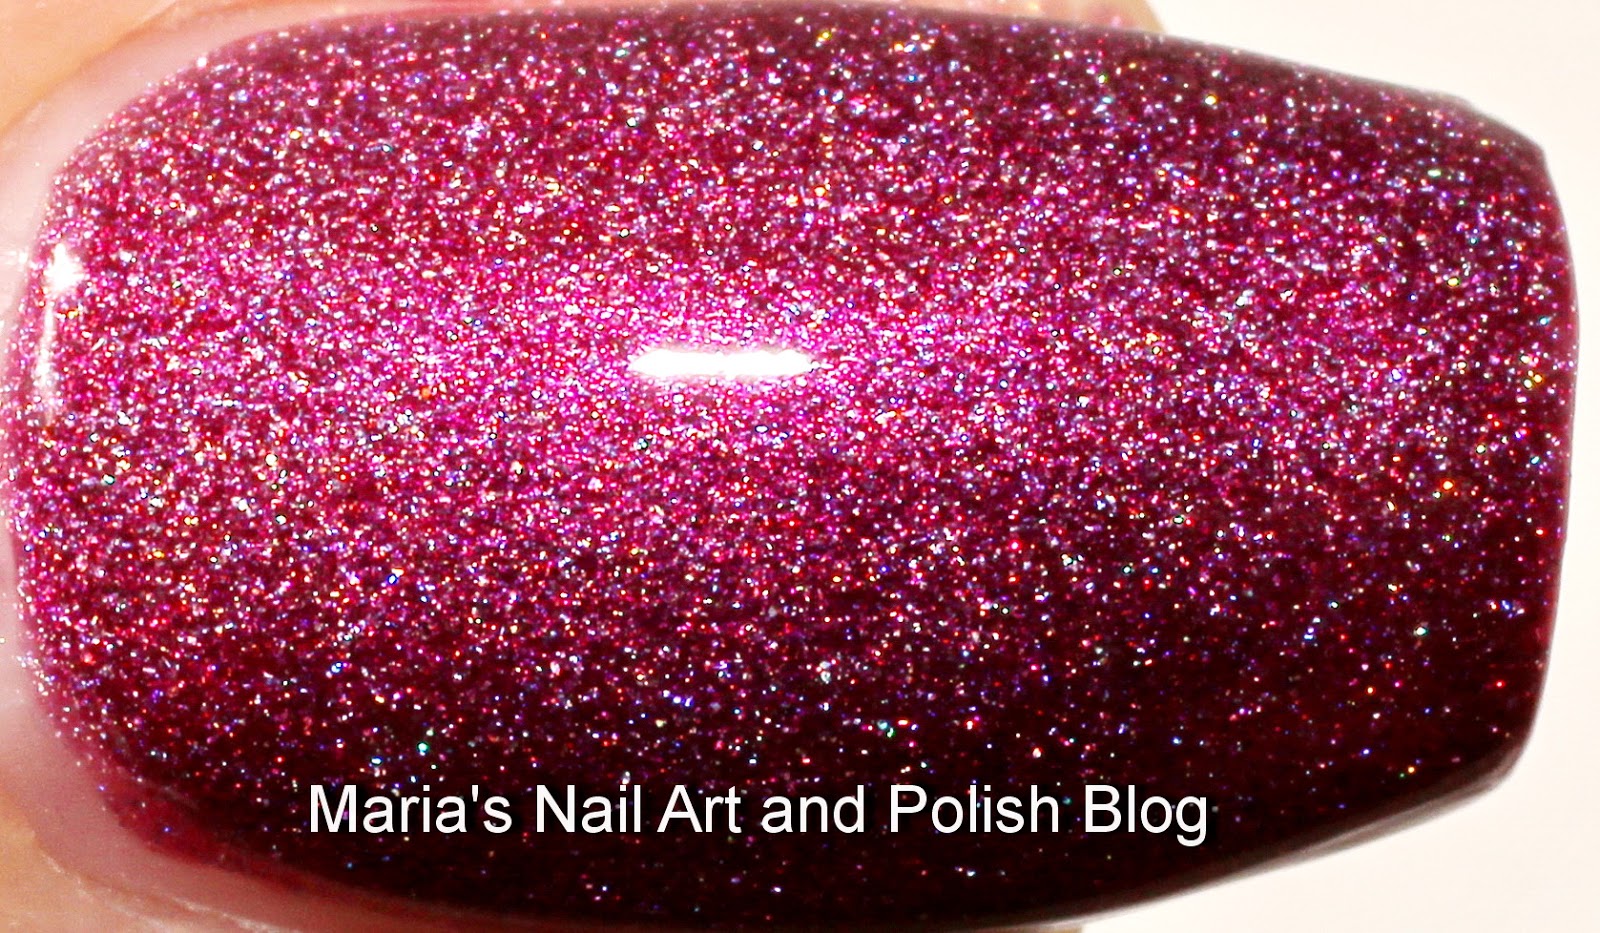 2. L.A. Colors Majestic Nail Polish in "Majestic Magenta" - wide 3